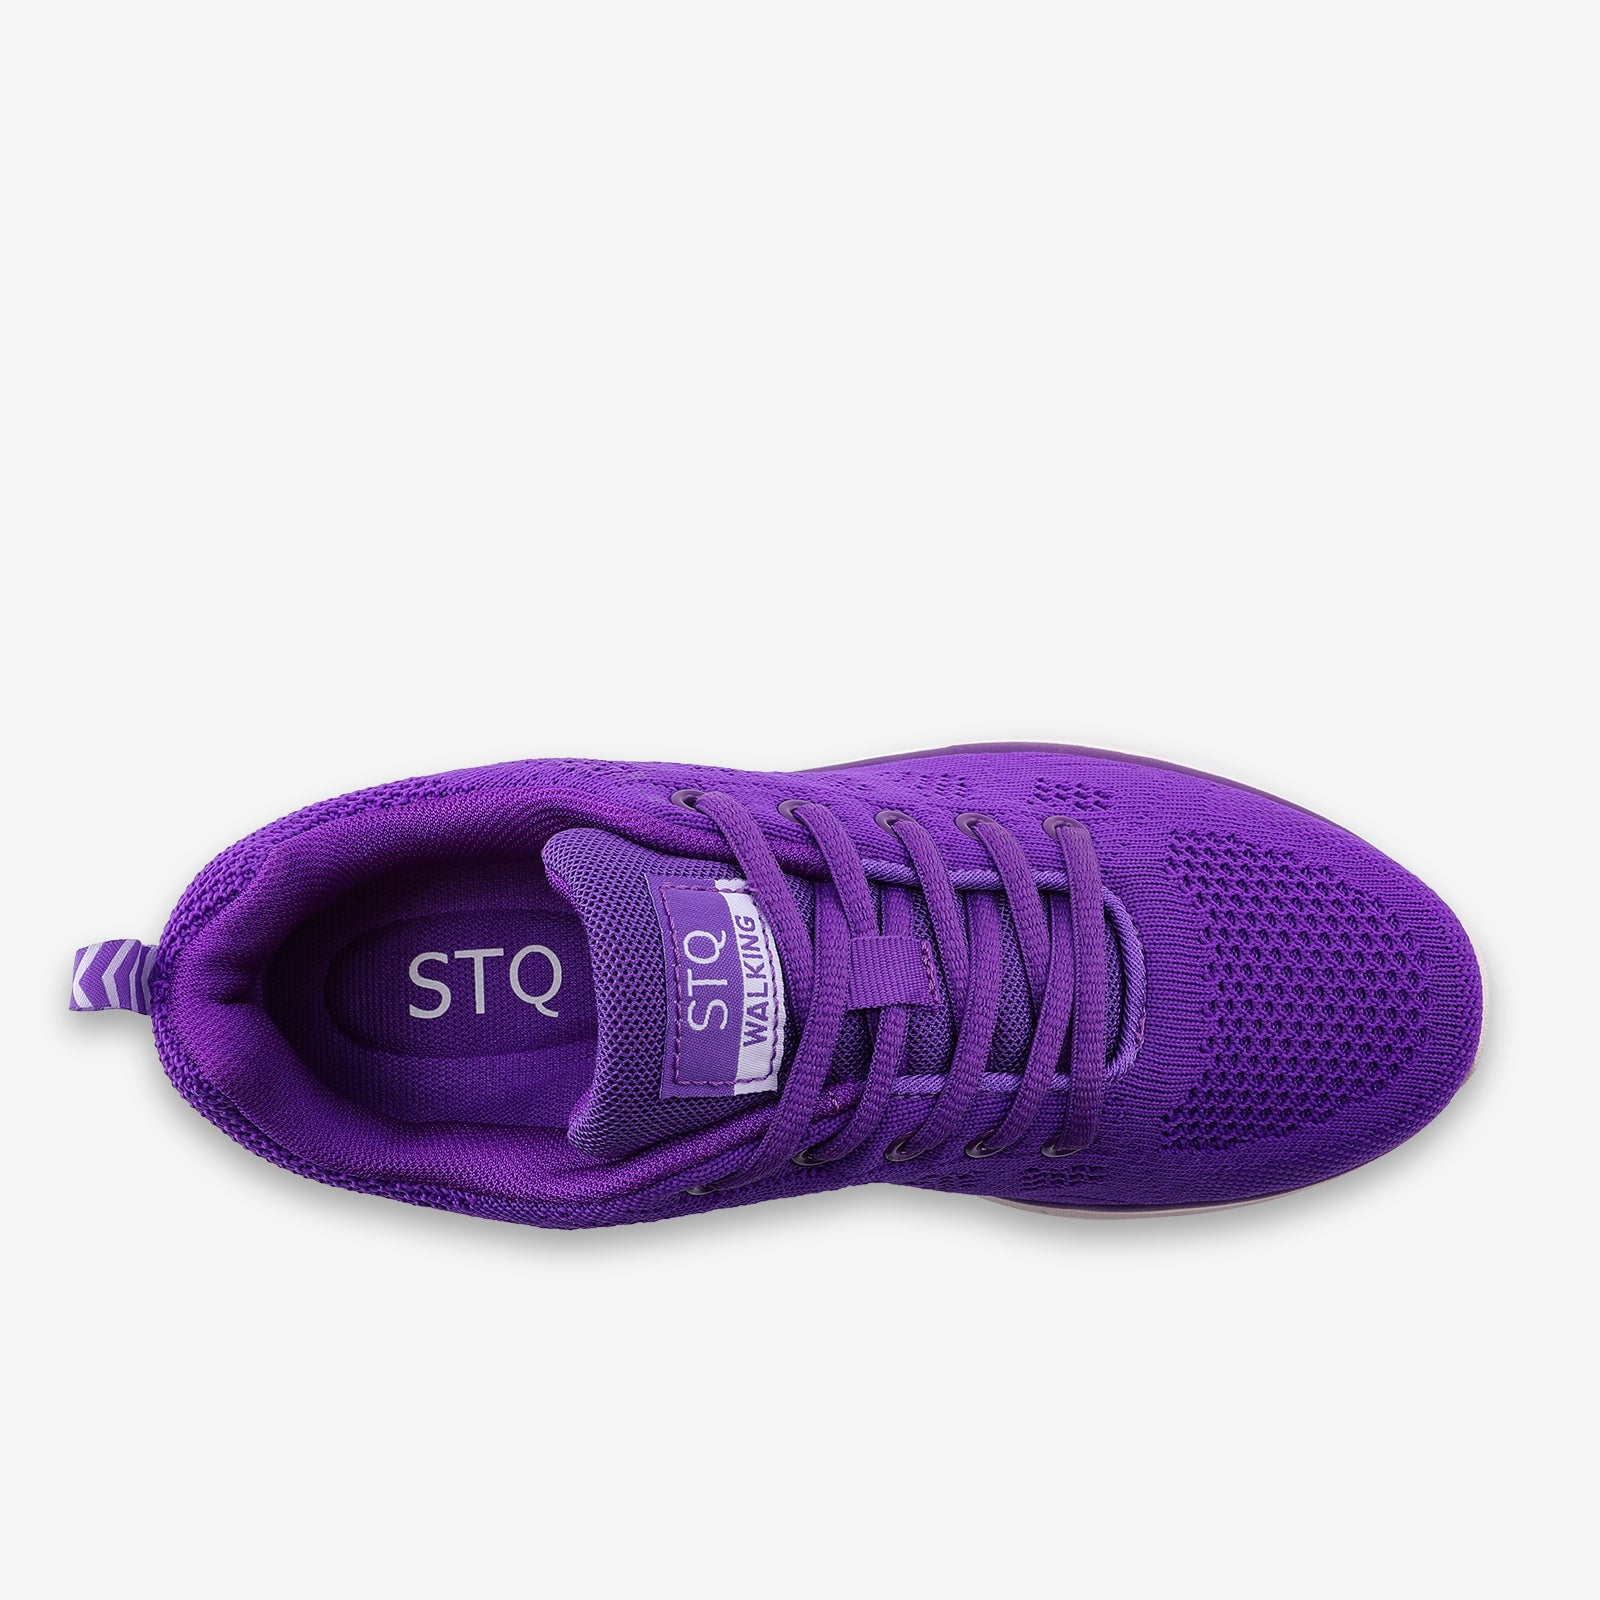 stq-running-shoes-lightweight-sneakers-view